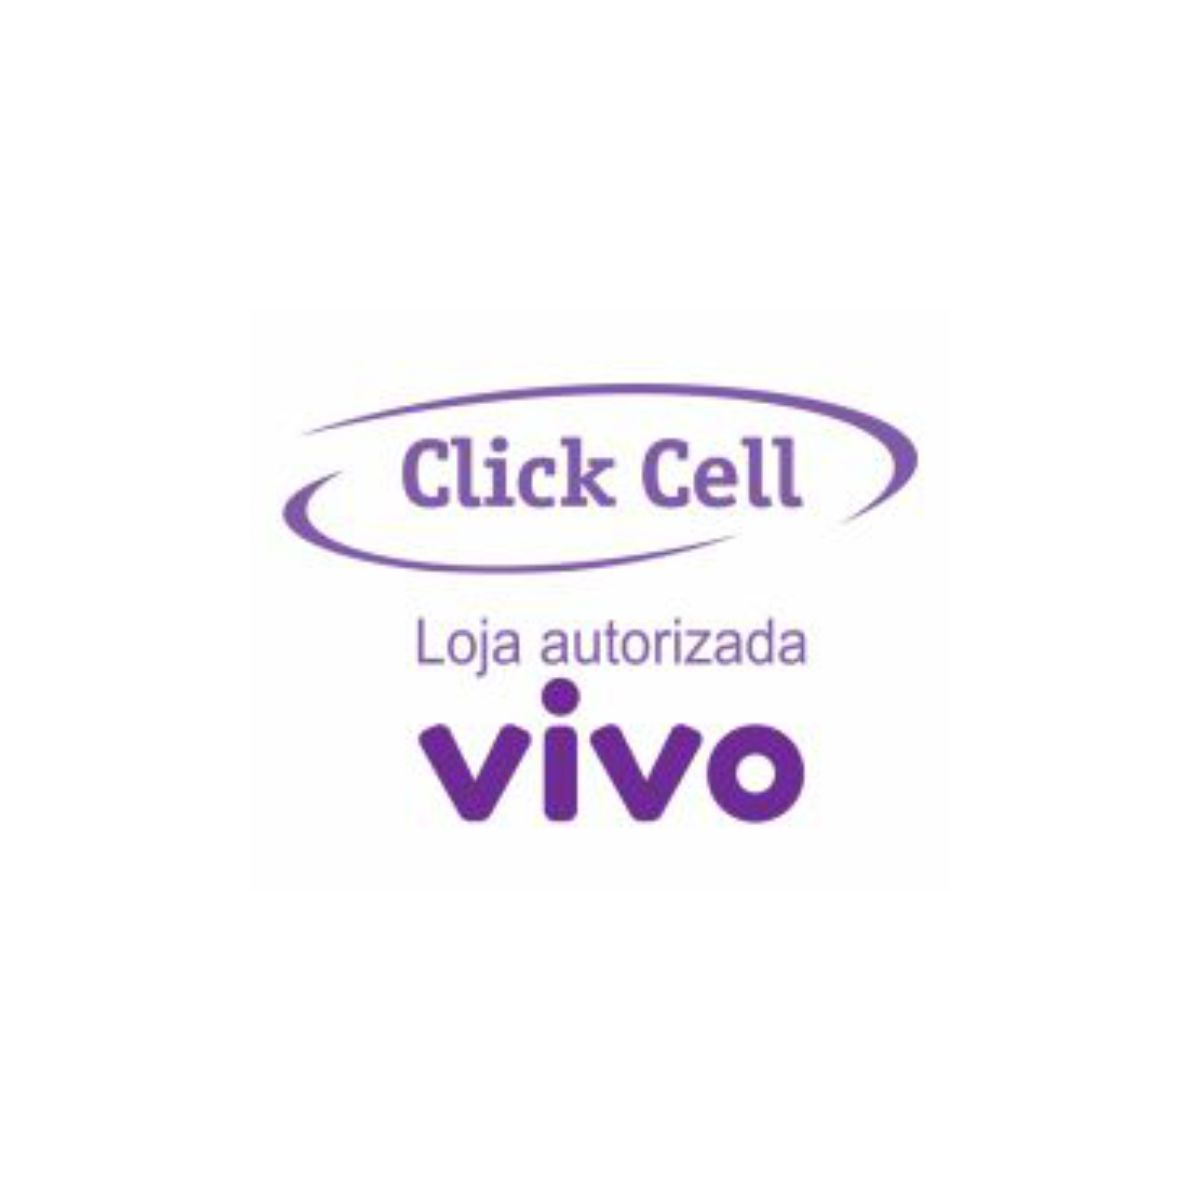 Zotty Celulares Ltda (Click Cell)